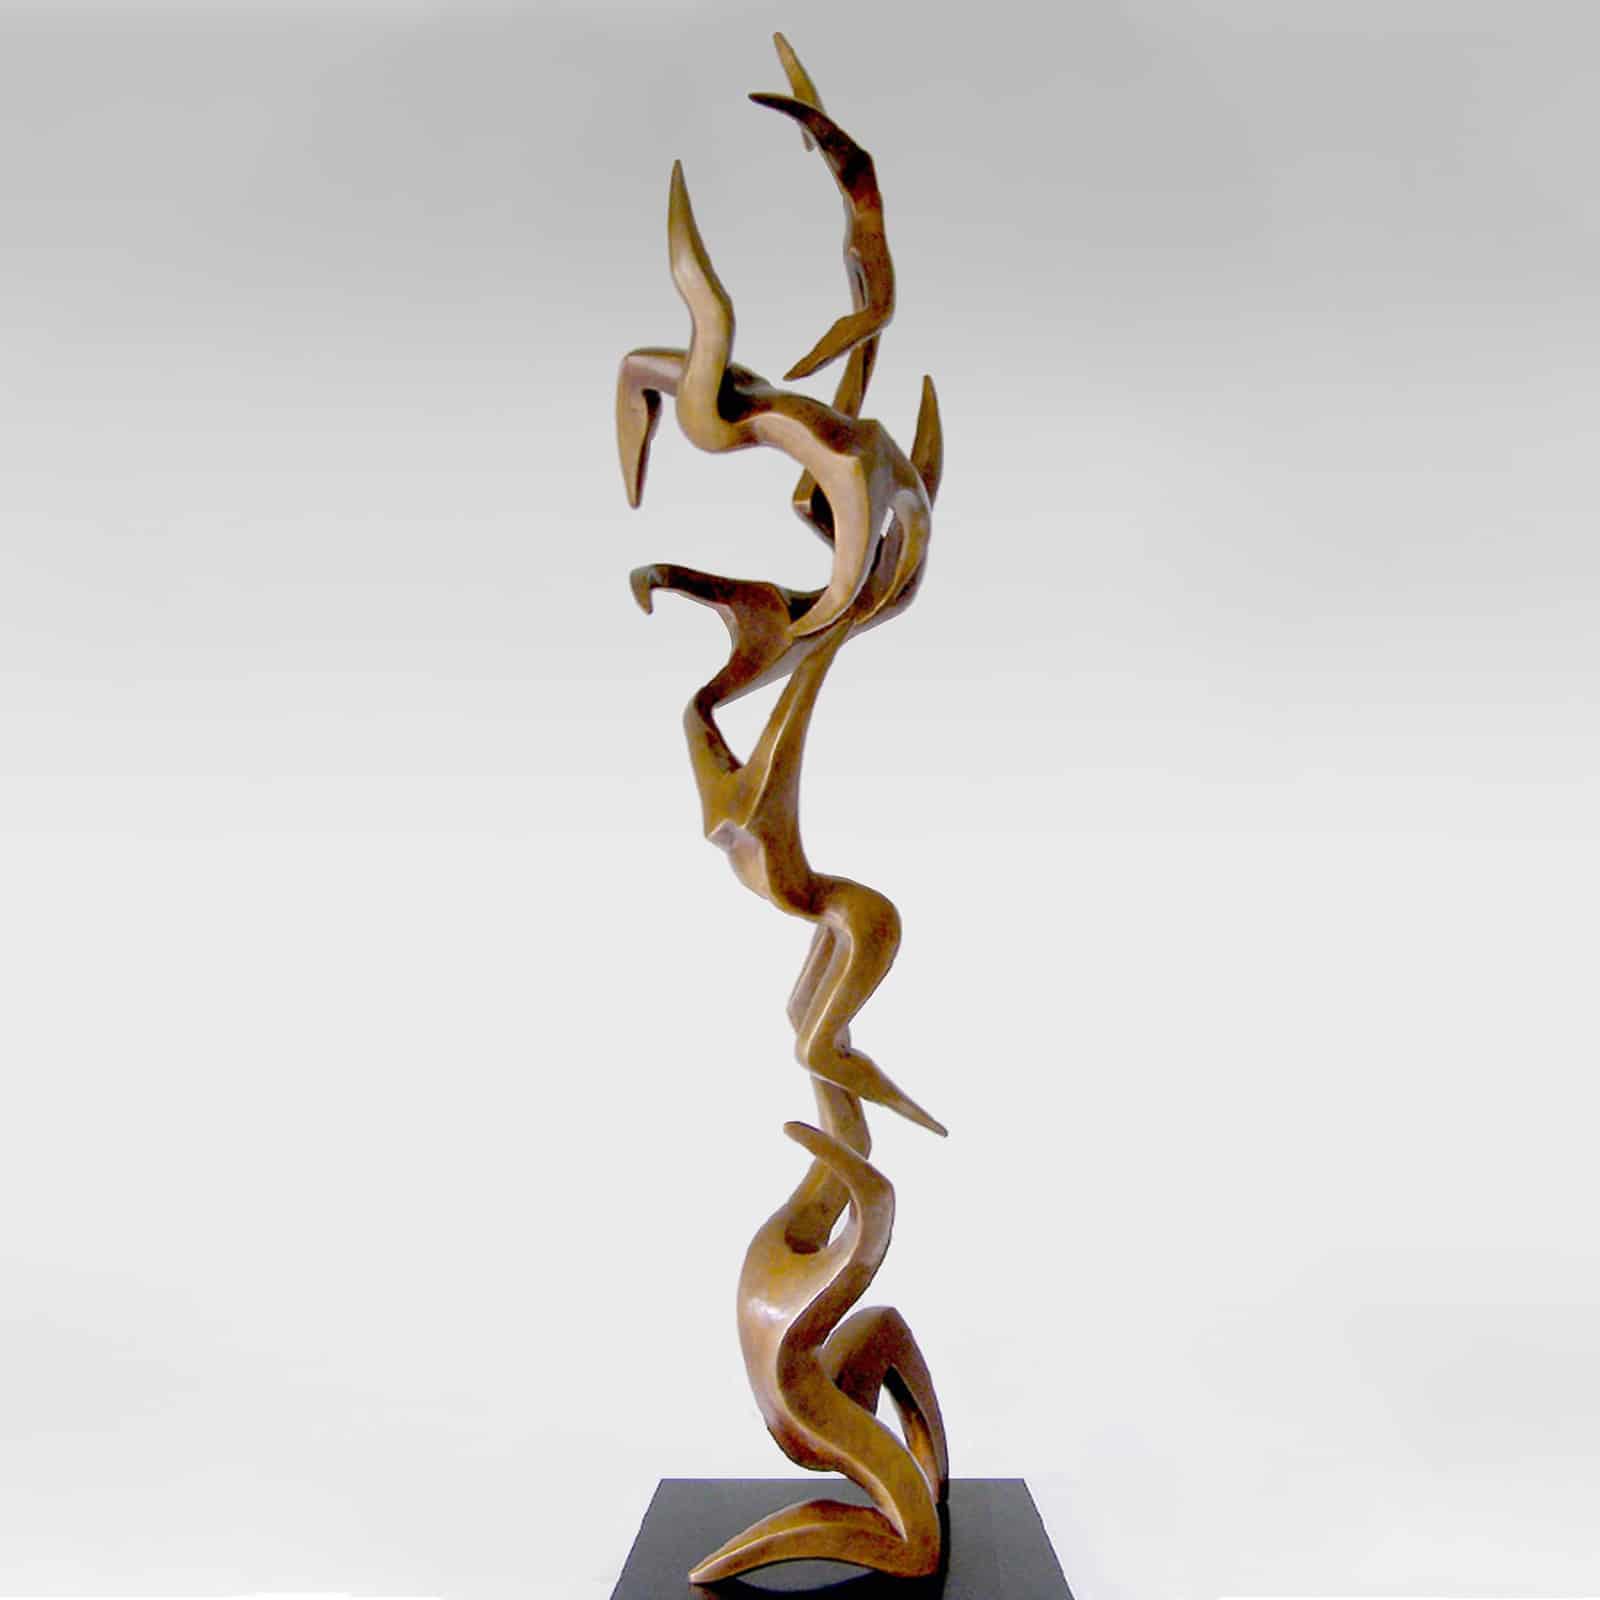 michael Vaynman bronze sculpture, sydney sculpture